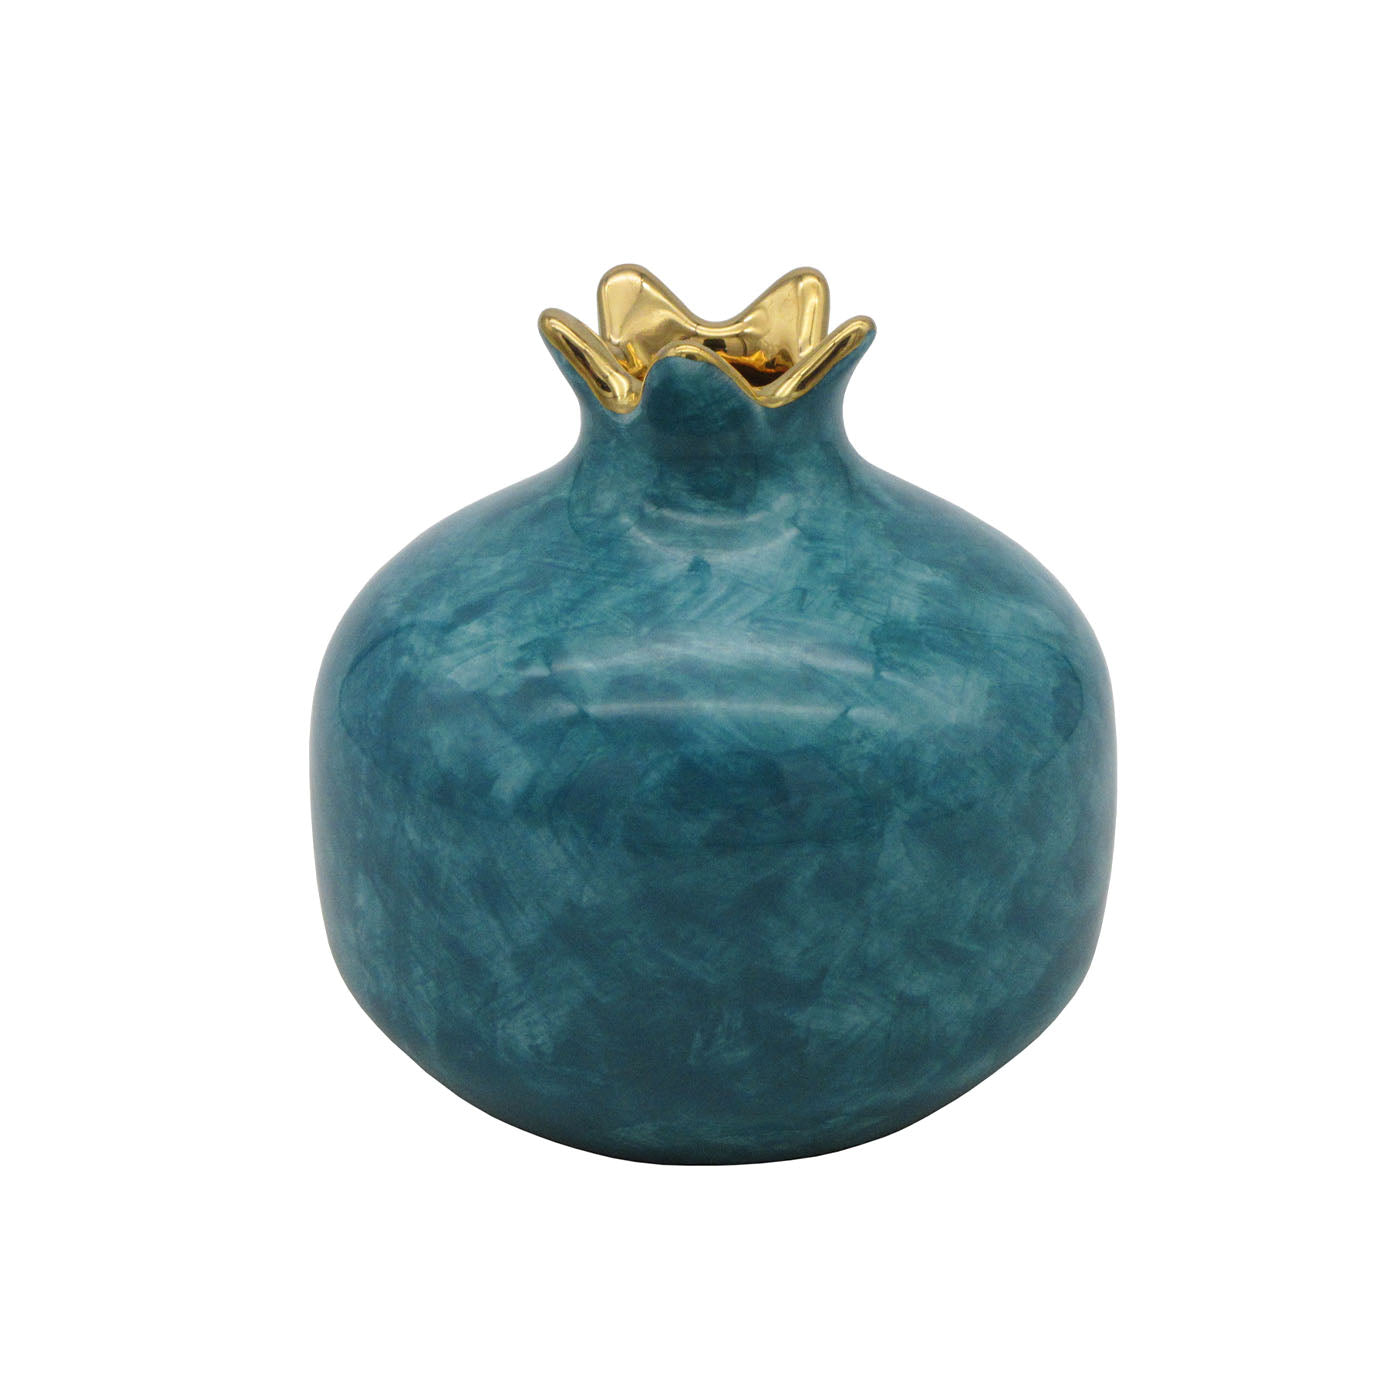 Small Blue Ceramic Pomegranate - Alternative view 1